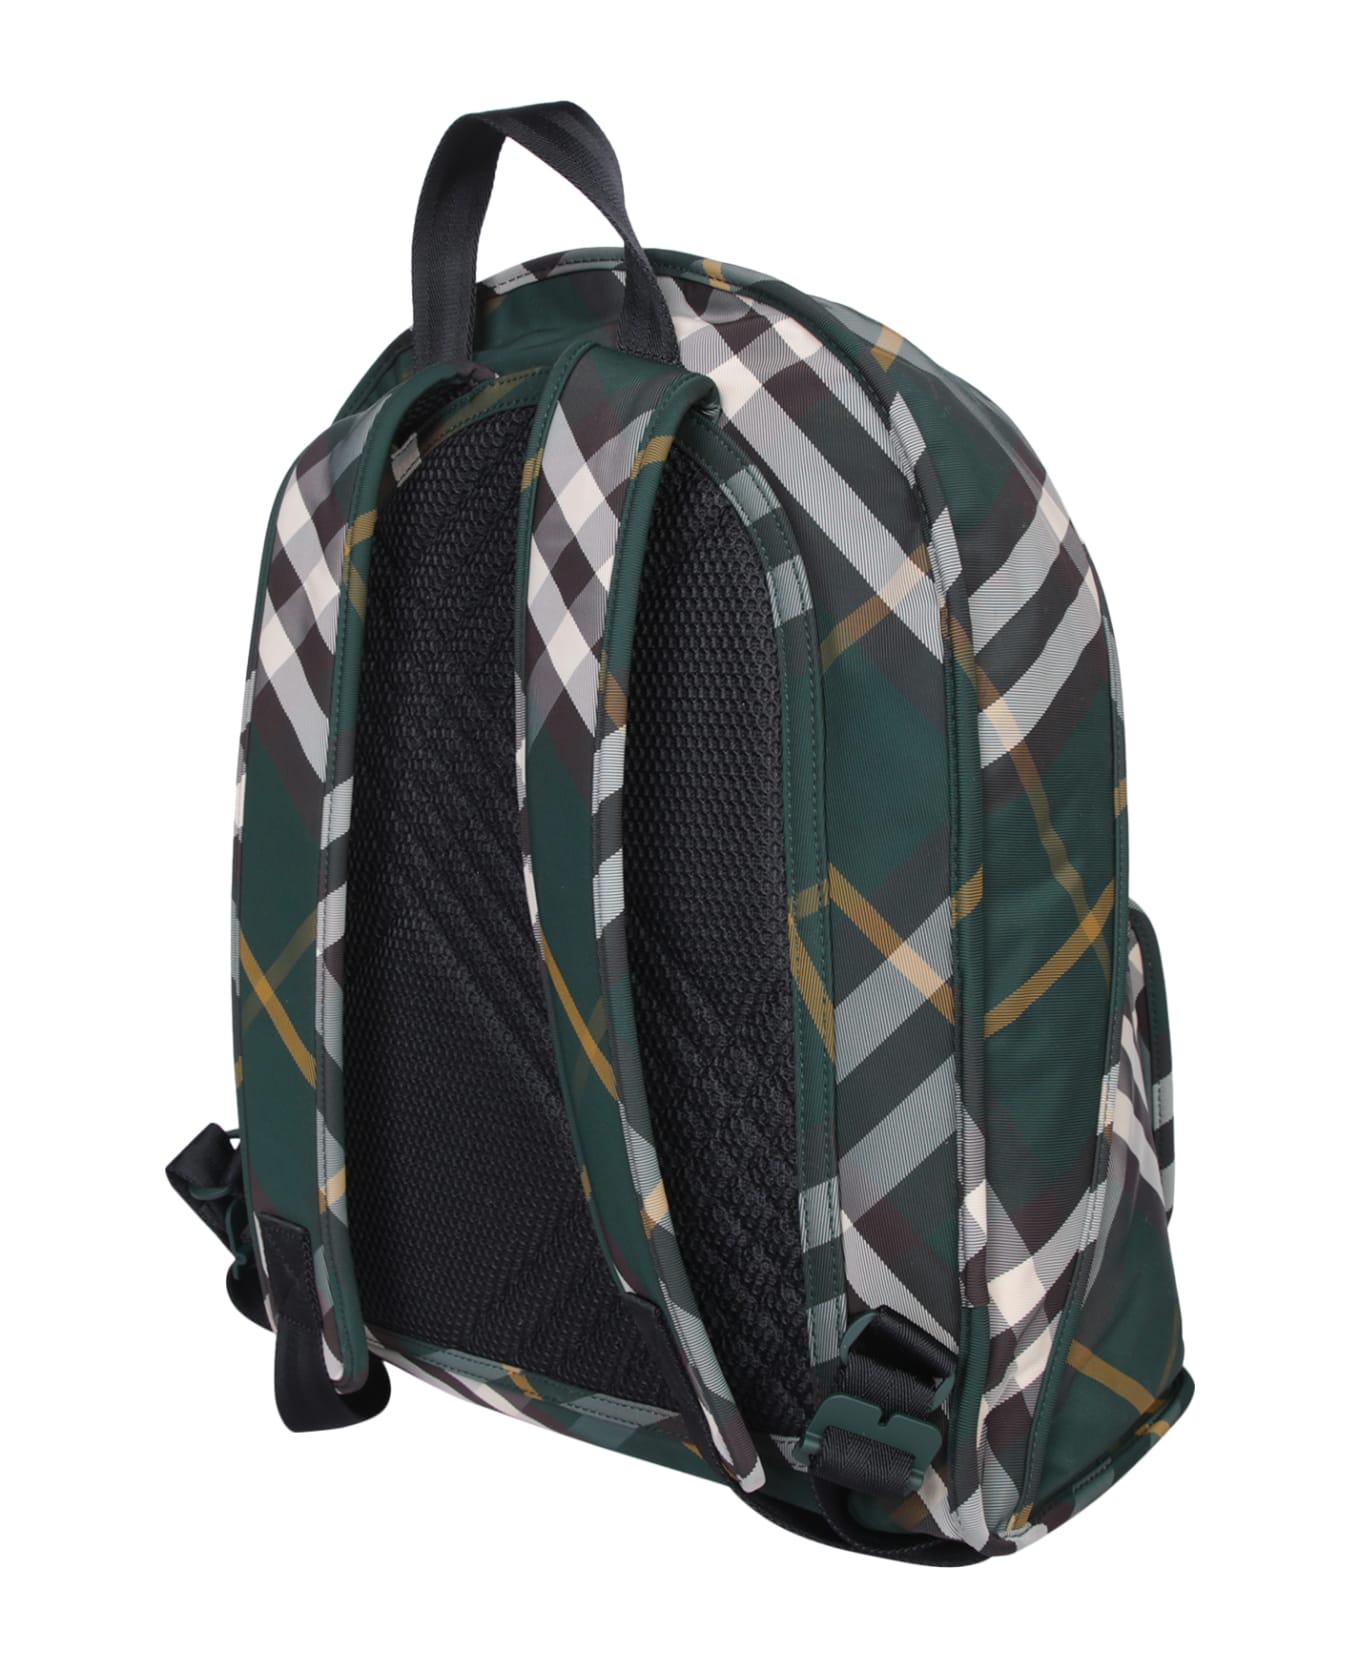 Burberry Backpack - Green